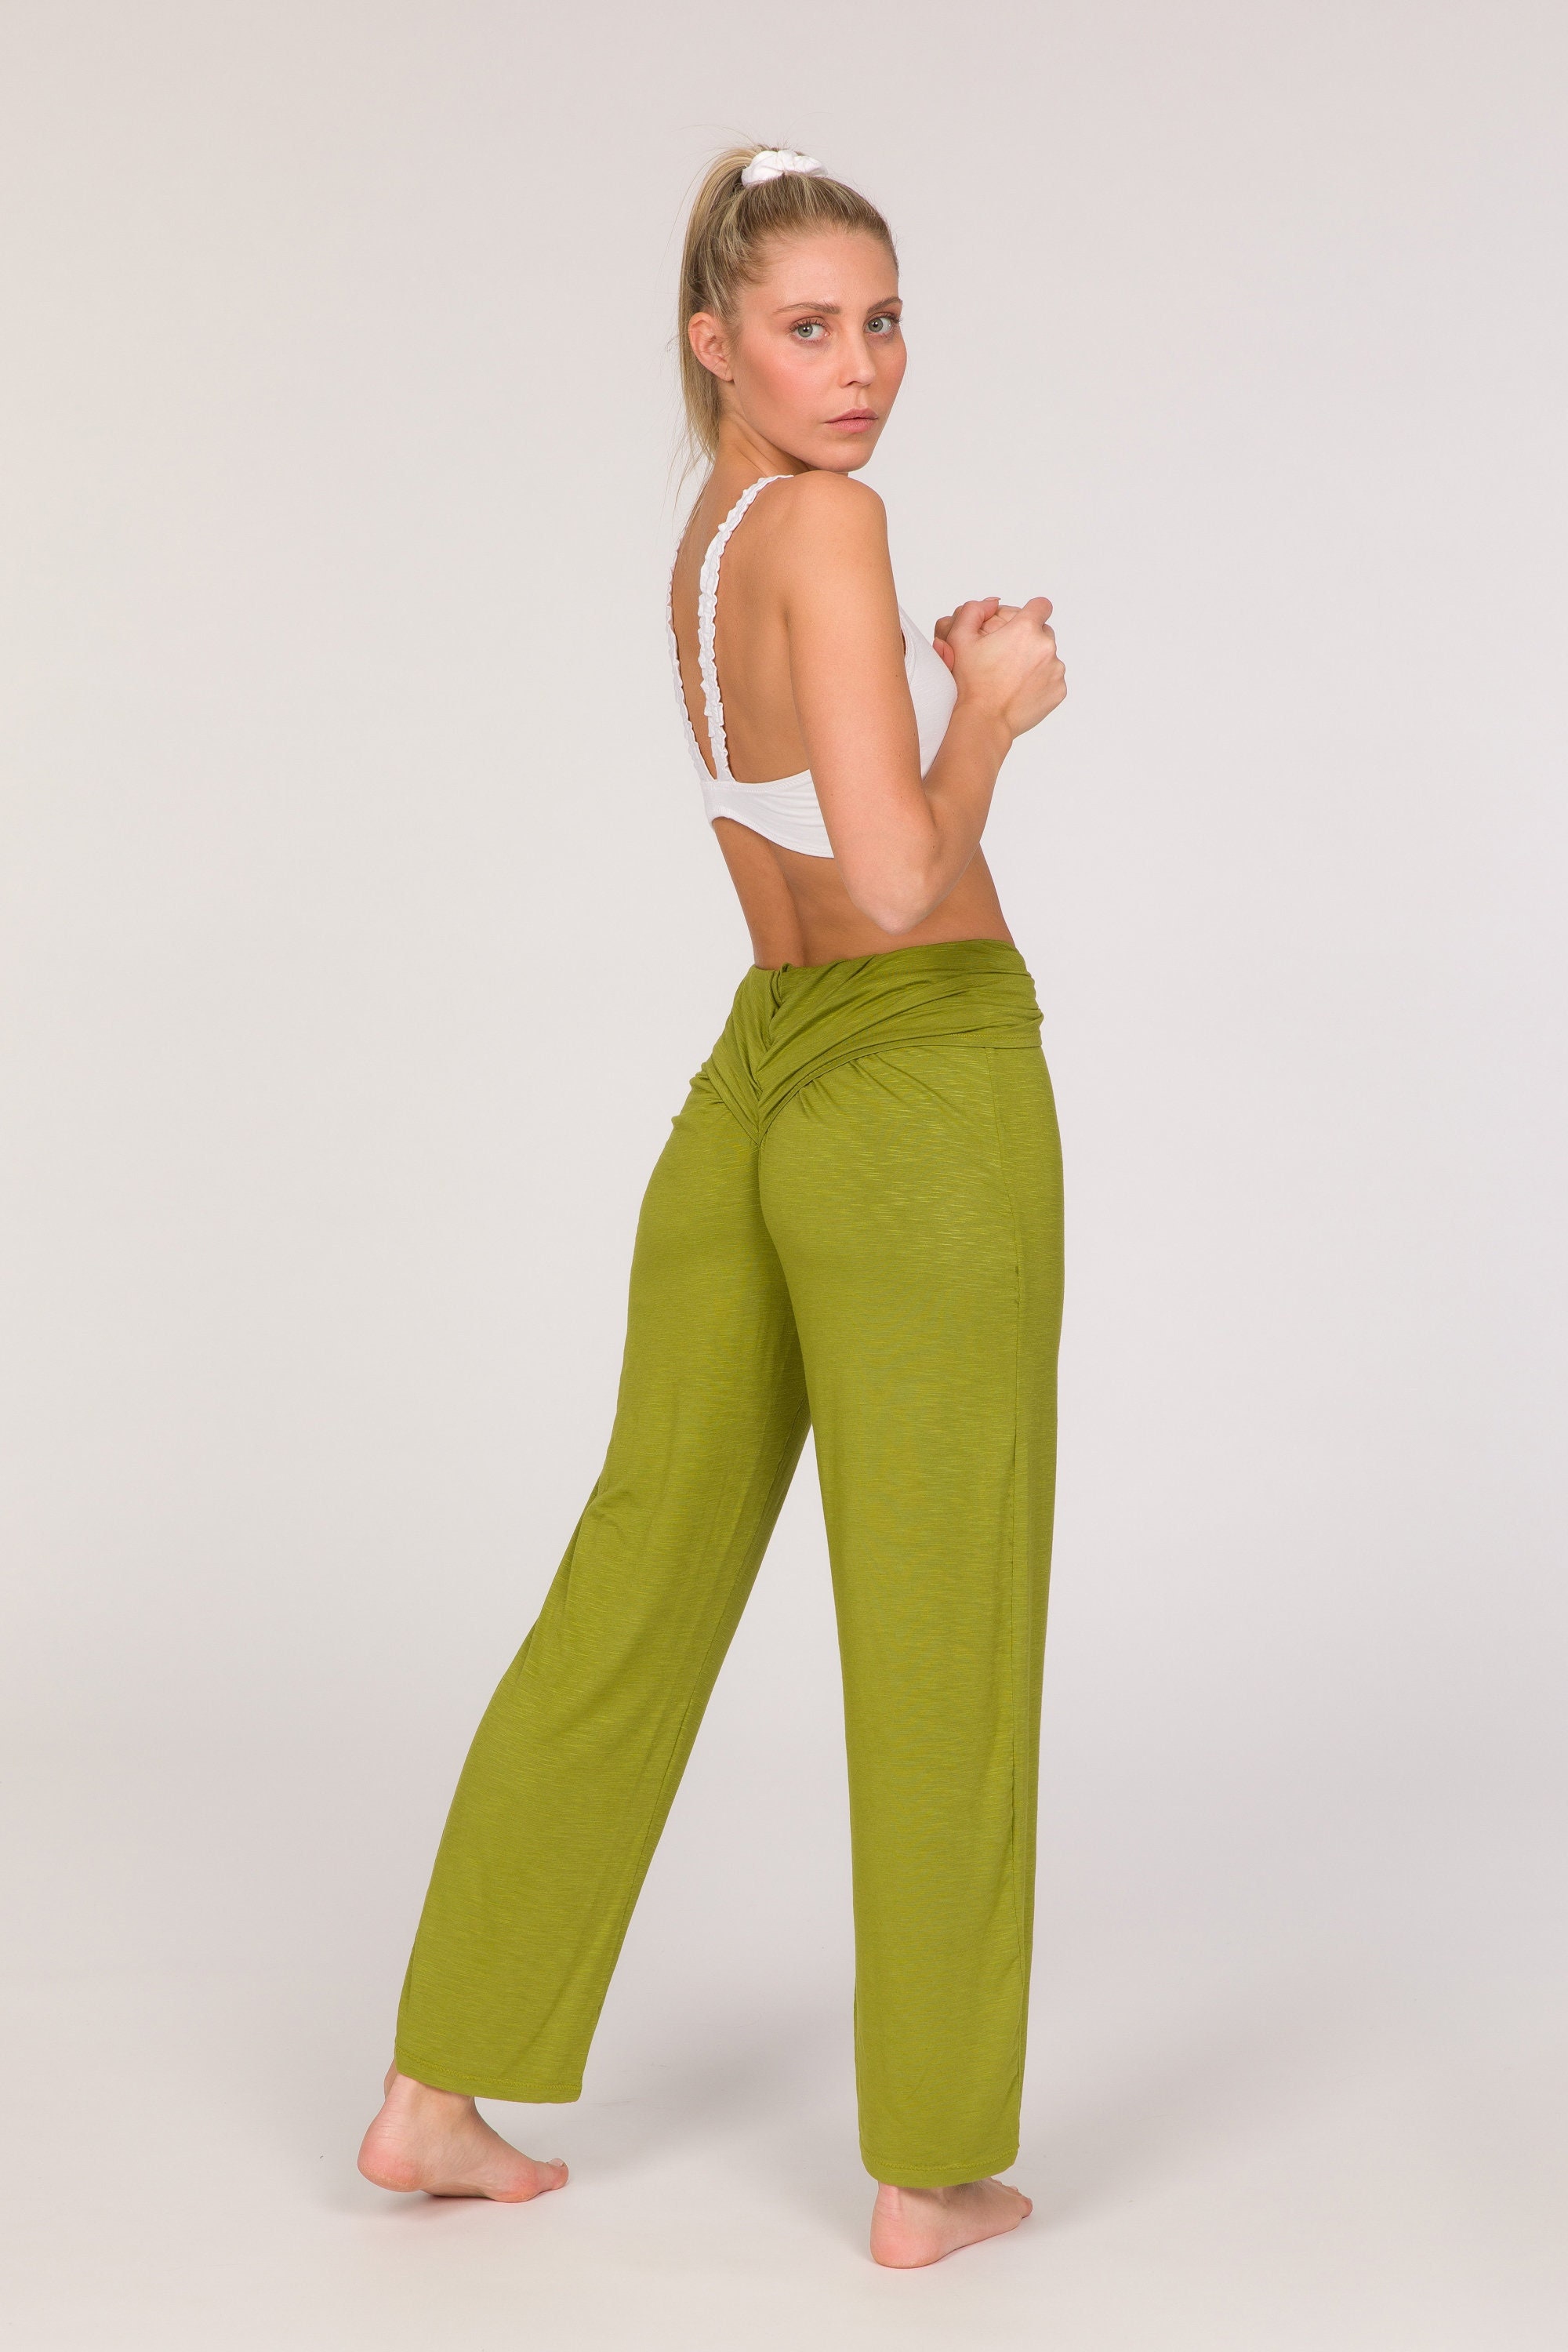 Yoga Pants for Women, Yoga Clothing, Short Harem Pants , Yoga Pants Plus  Size, Capri Yoga Pants, Harem Yoga Pants, Kundalini Yoga 